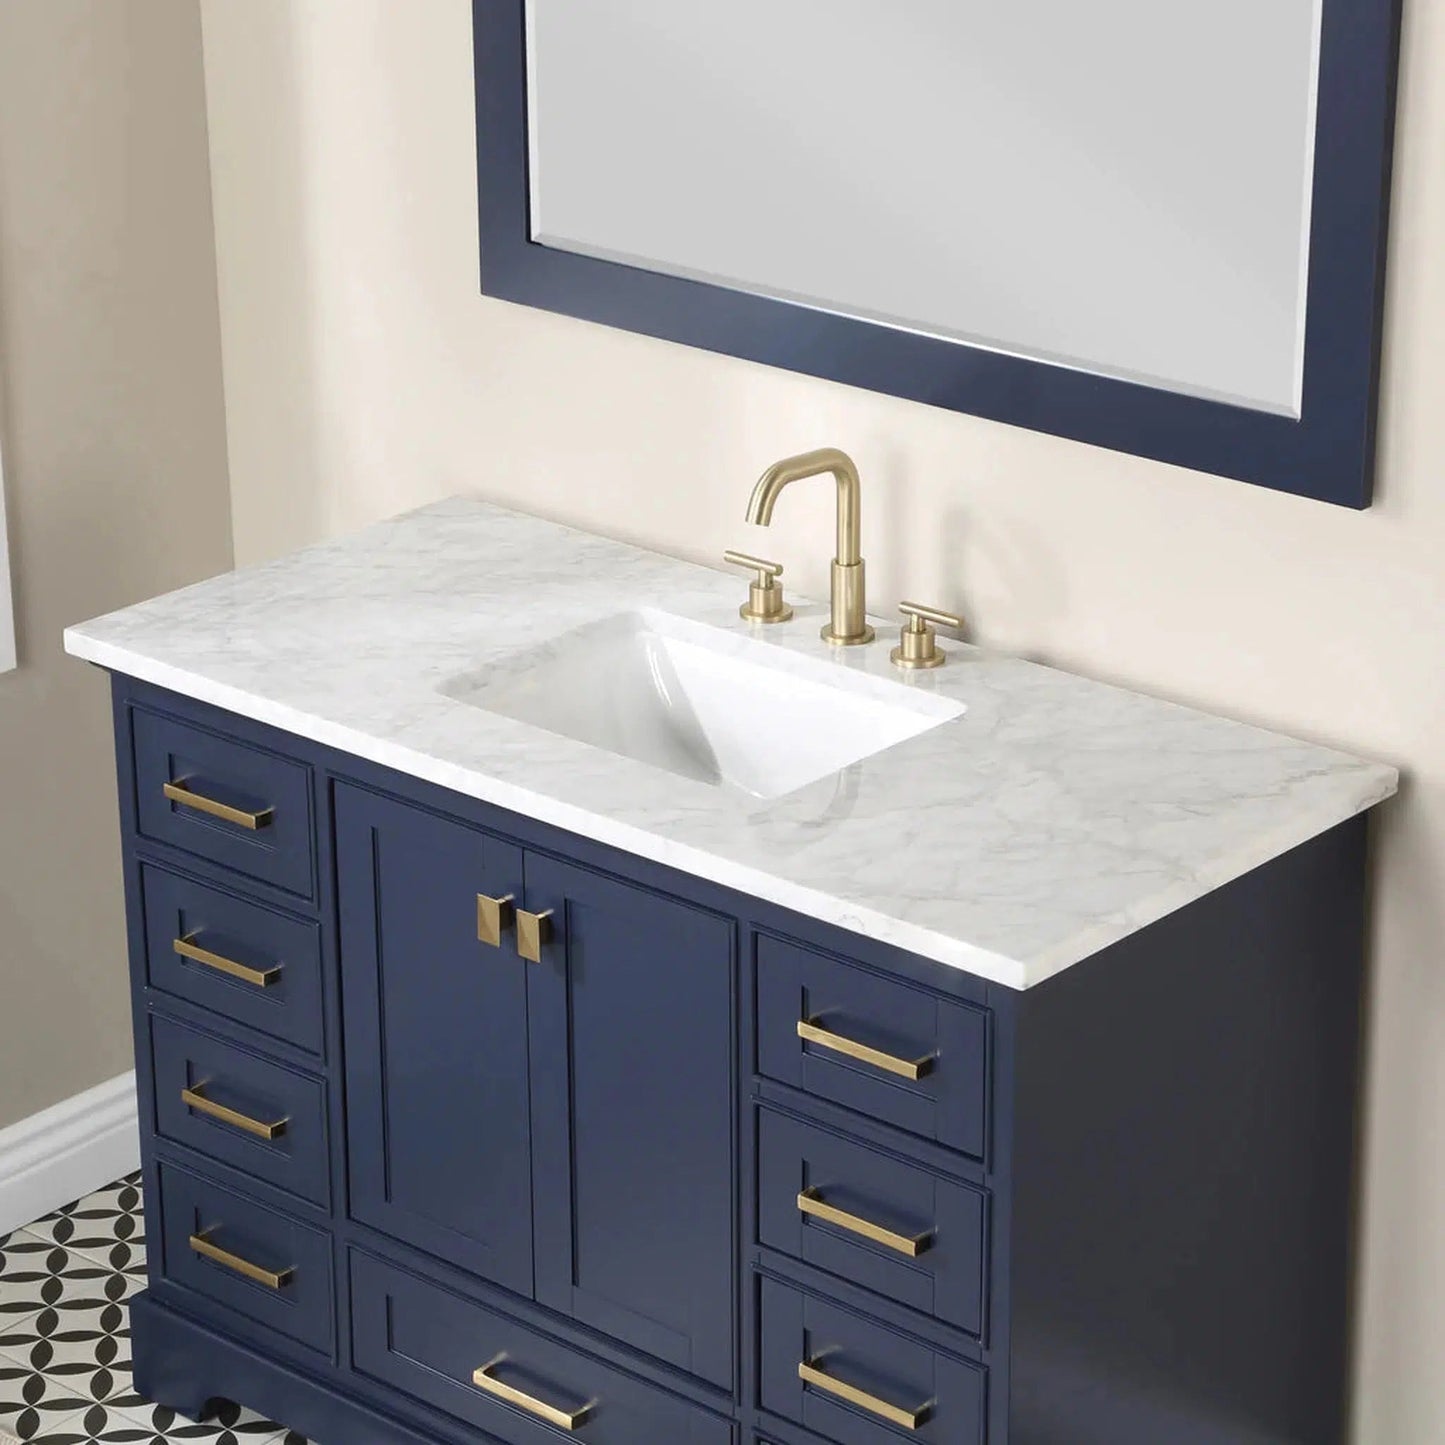 Stufurhome Brittany 48" Dark Blue Freestanding Bathroom Vanity with Rectangular Single Sink, Wood Framed Mirror, 9 Drawers, 2 Doors and Widespread Faucet Holes